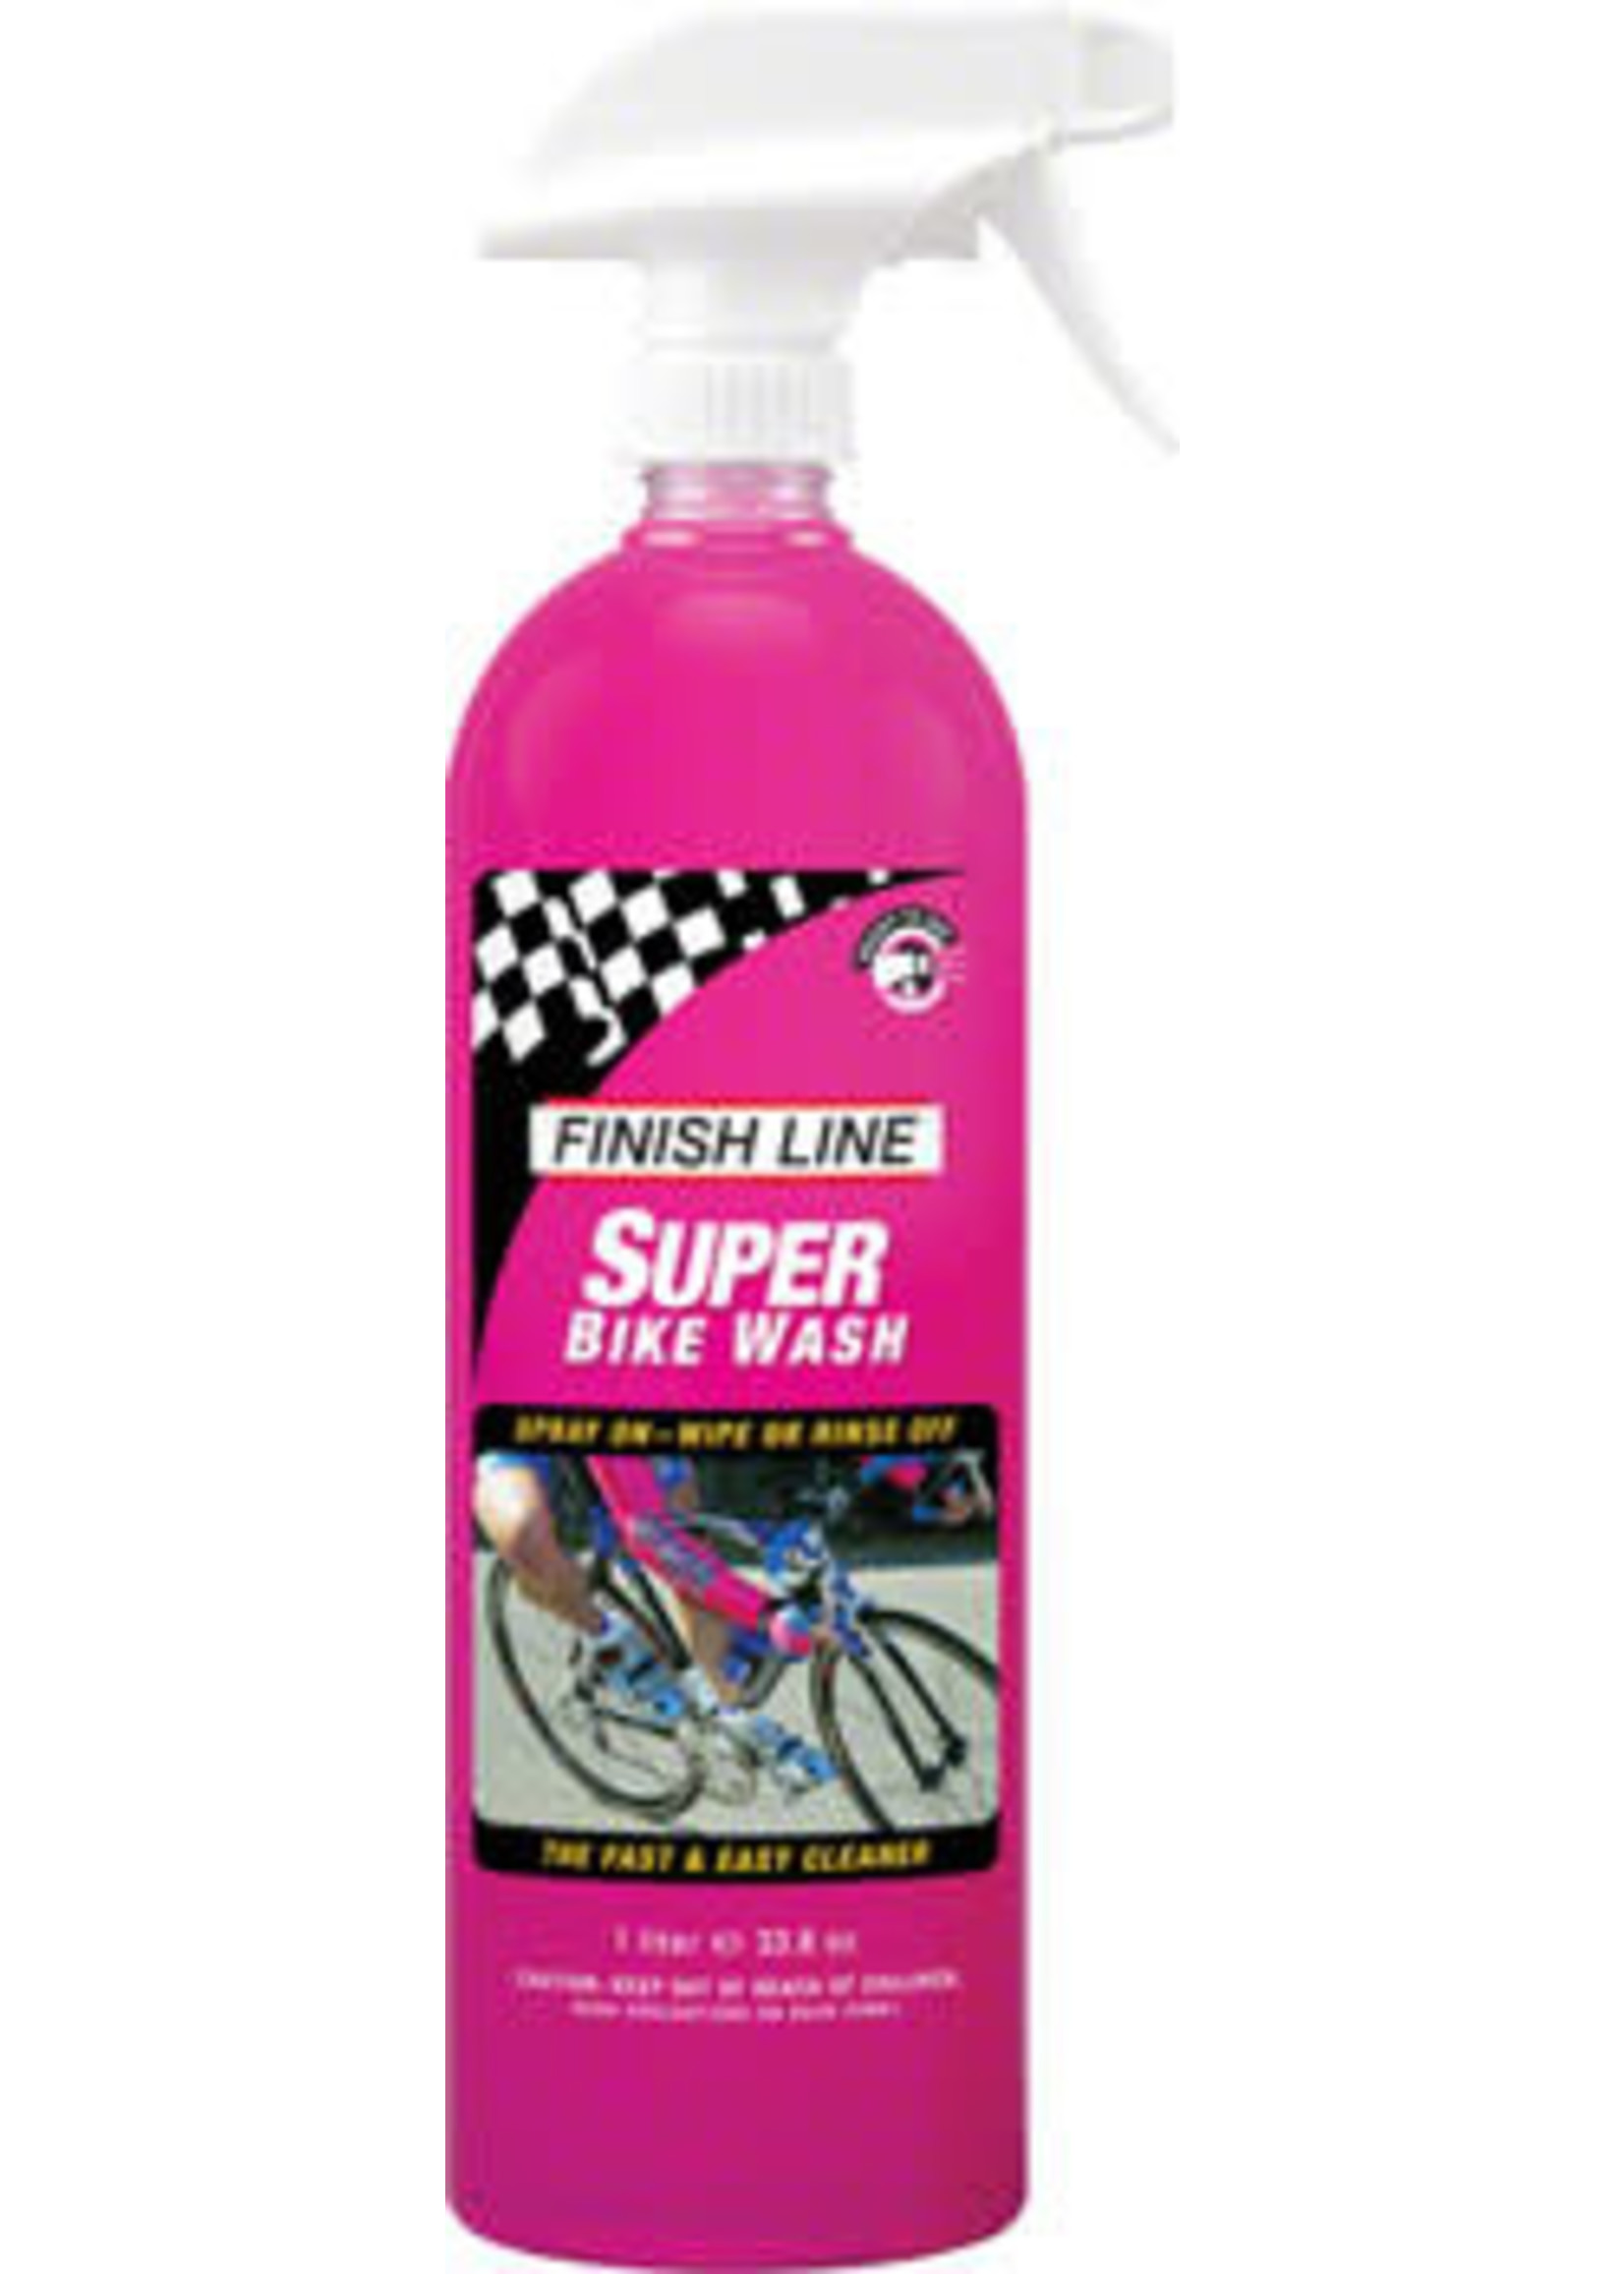 Finish Line Finish Line Super Bike Wash Cleaner, 34 oz Hand Spray Bottle